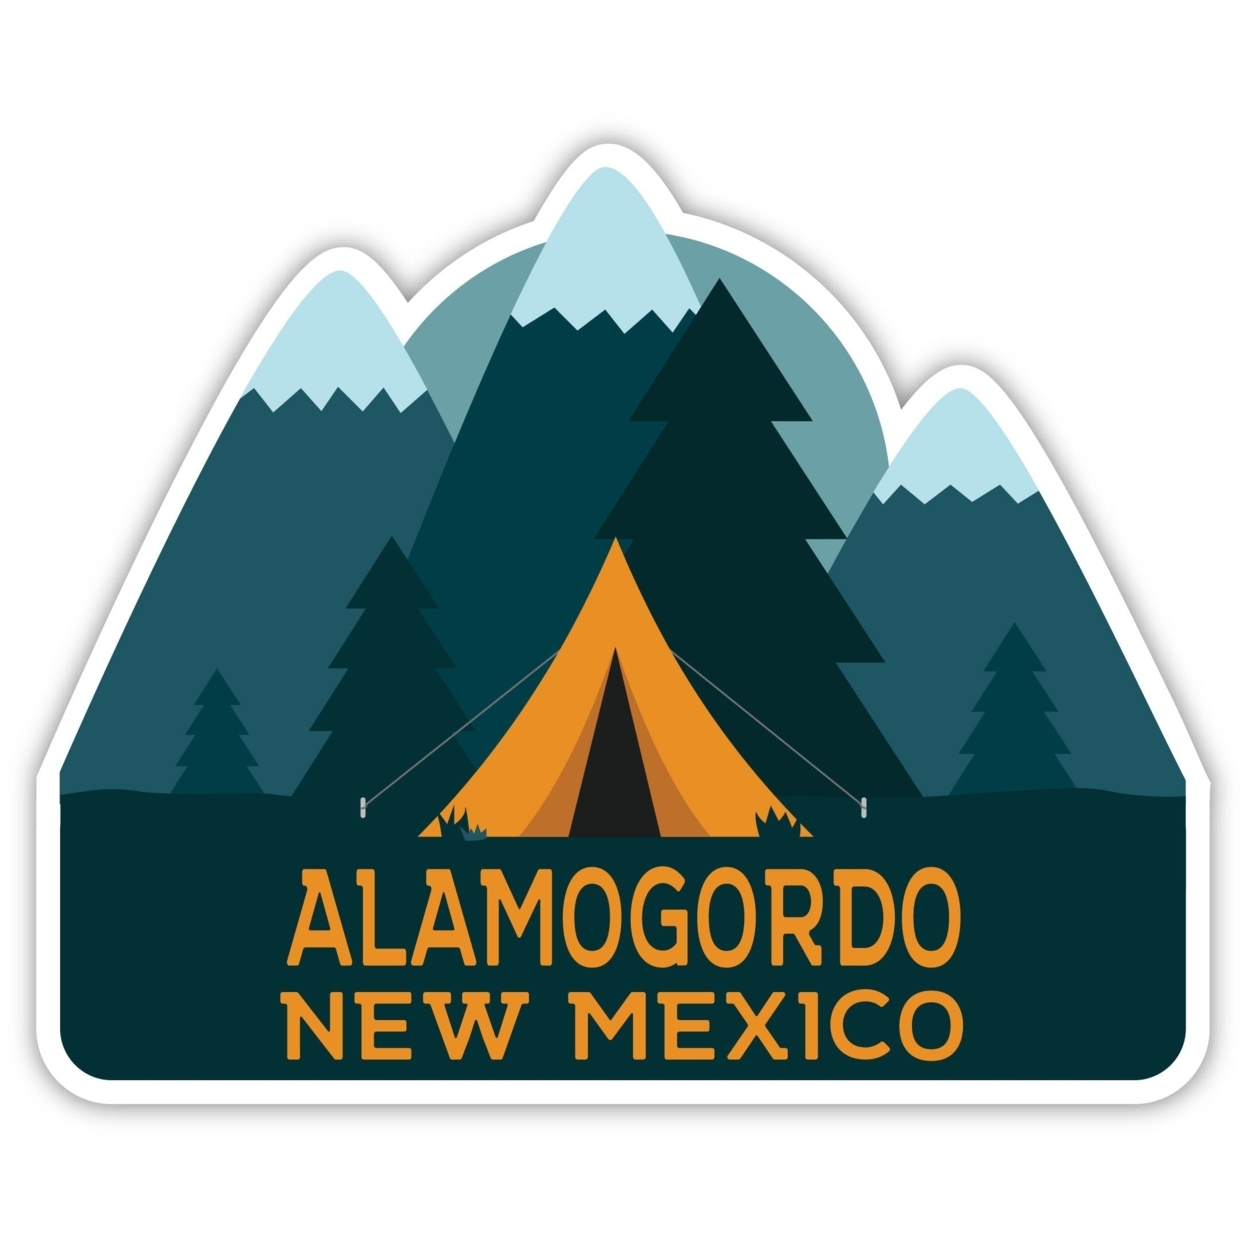 Alamogordo New Mexico Souvenir Decorative Stickers (Choose Theme And Size) - Single Unit, 8-Inch, Adventures Awaits